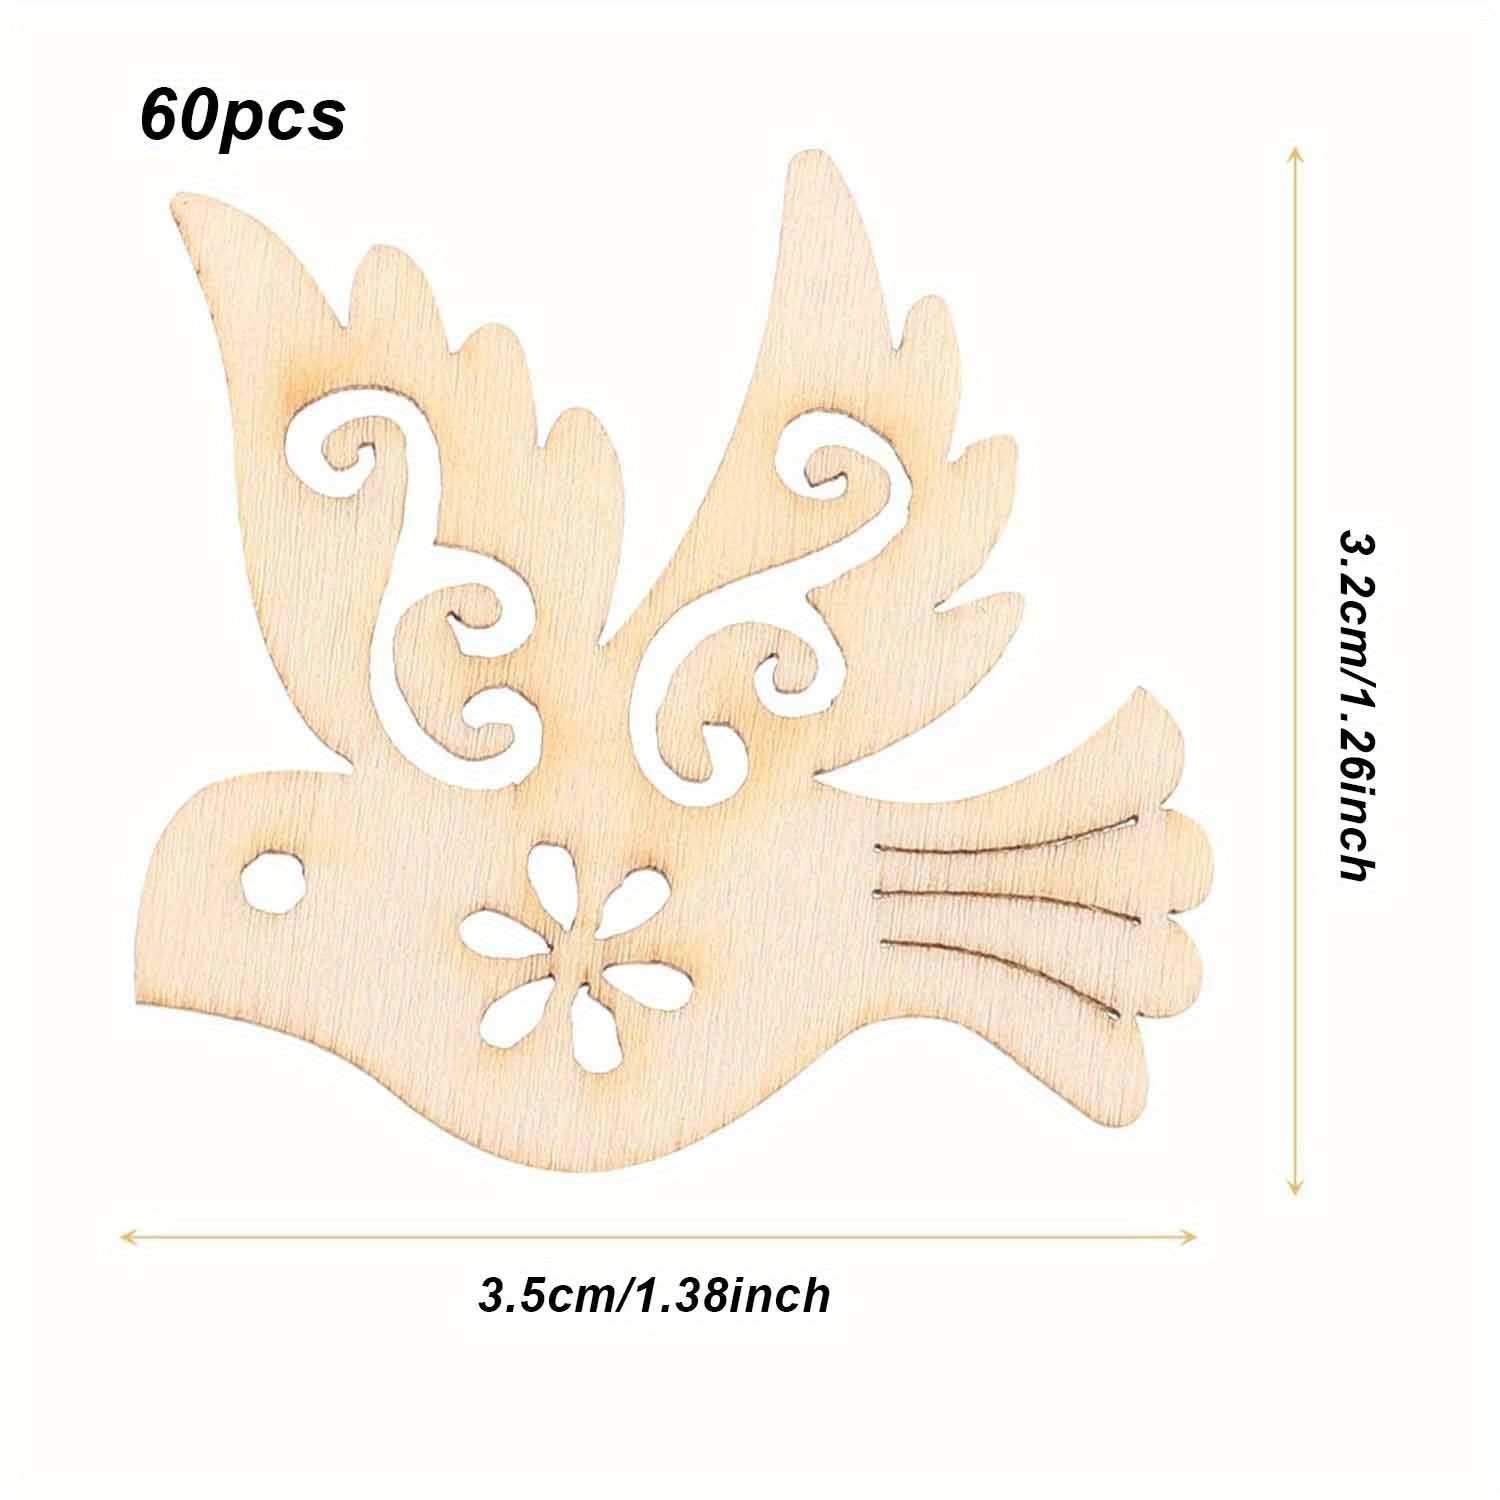 100pcs wood slices for crafts Wooden Shapes for Crafts Birds